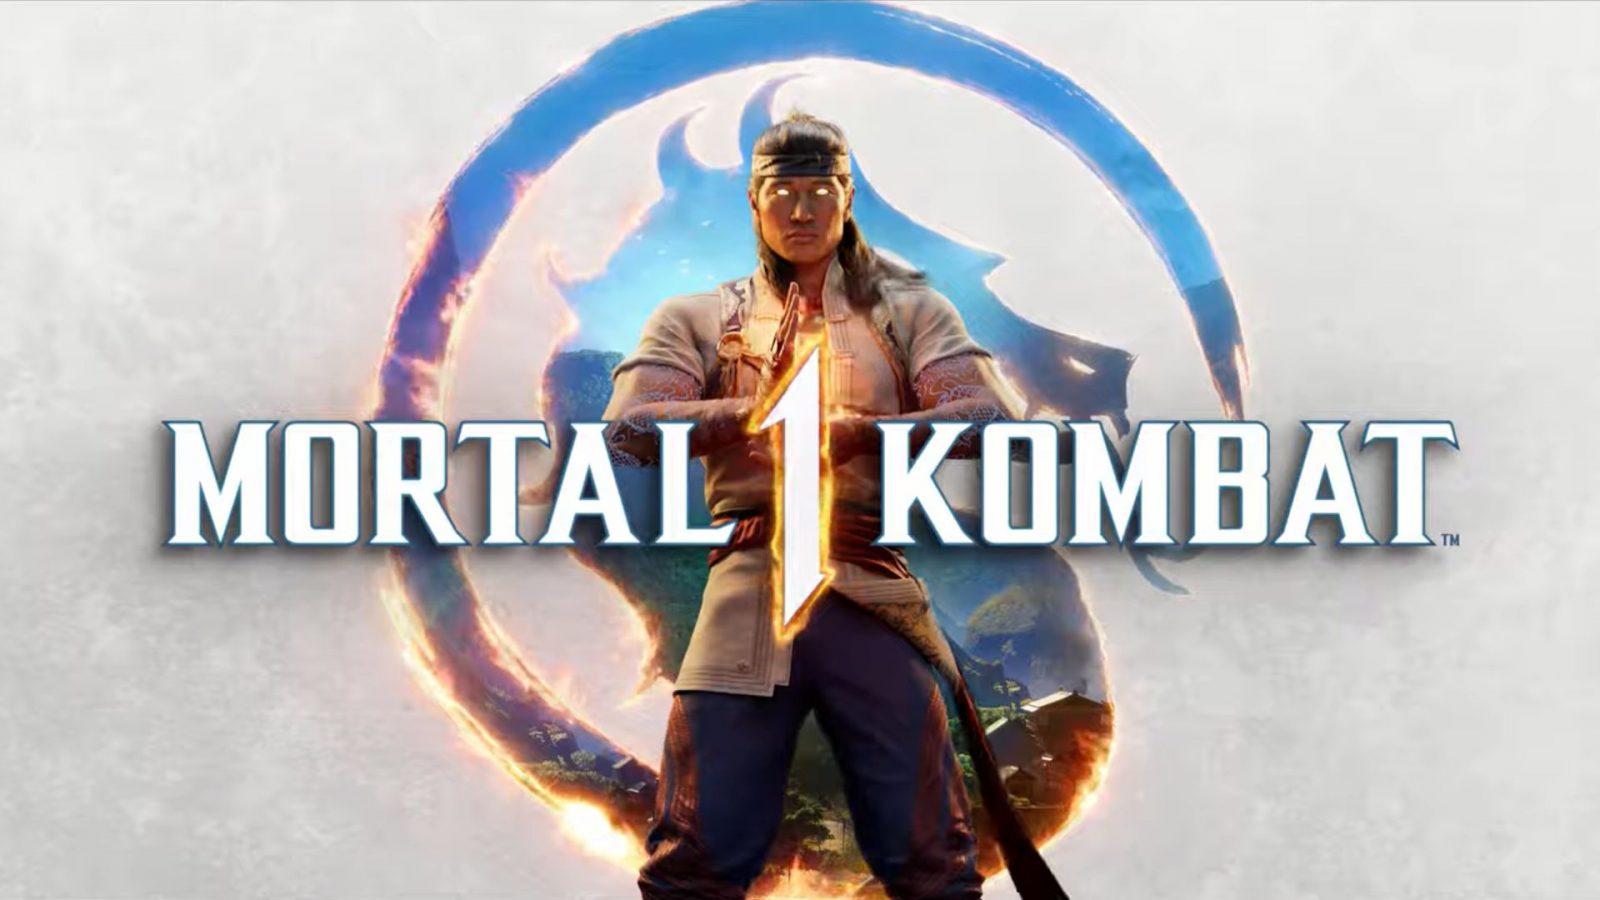 Brutal Trailer for MORTAL KOMBAT 1 Reveals Release Date and It